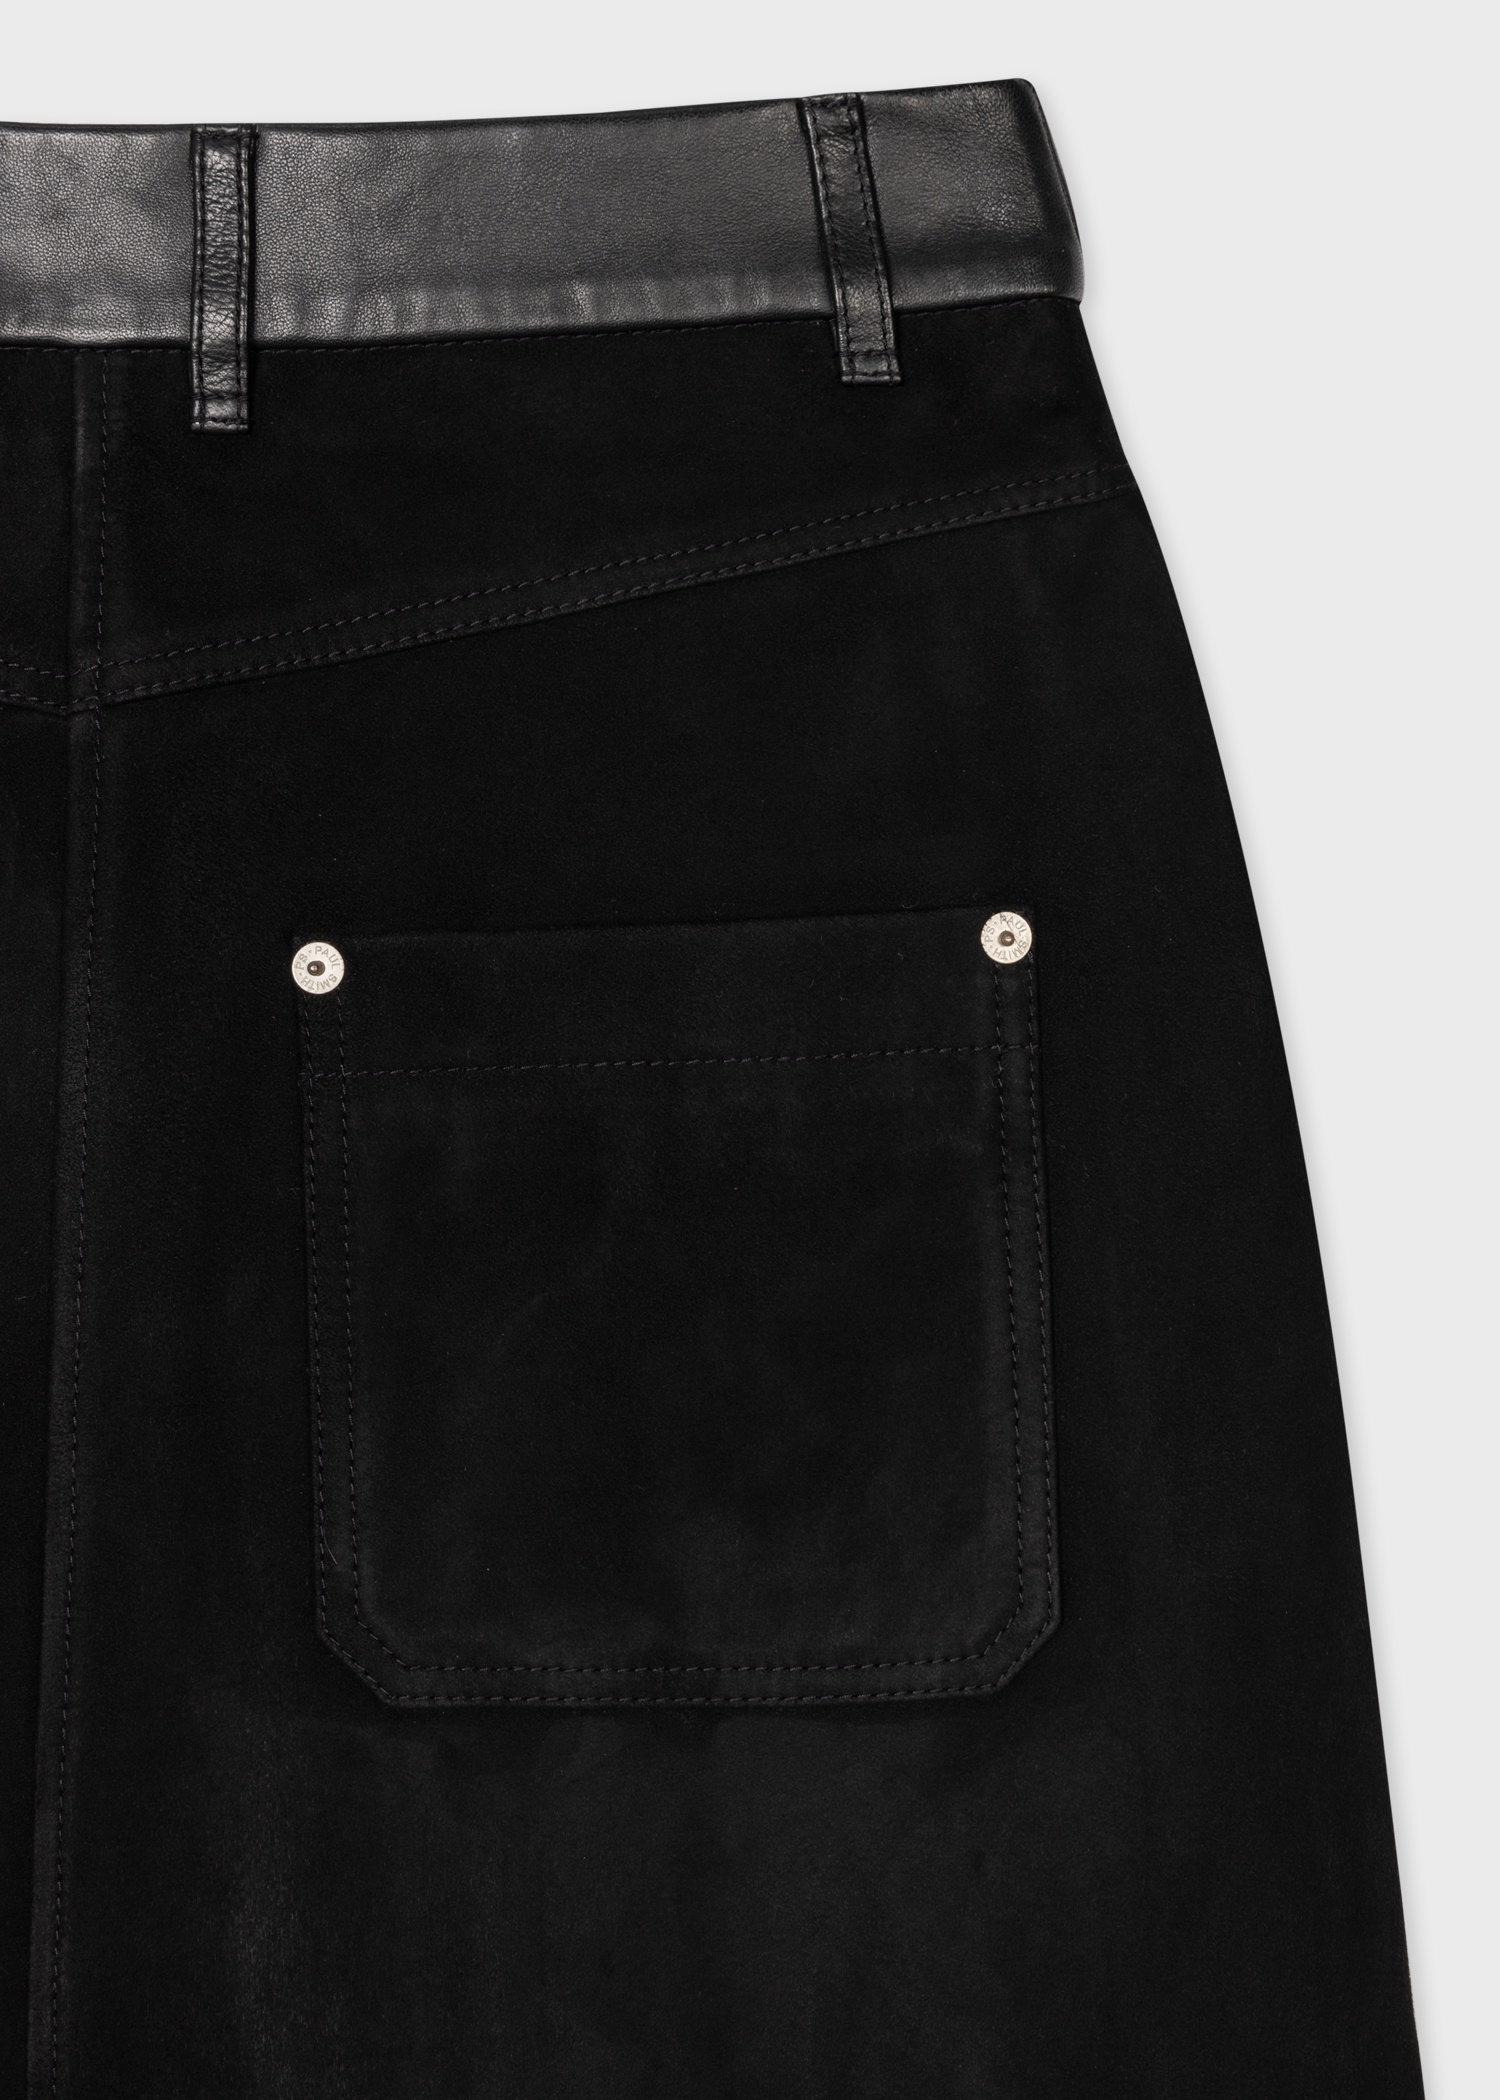 Women's Black Suede Contrasting Short Skirt - 3